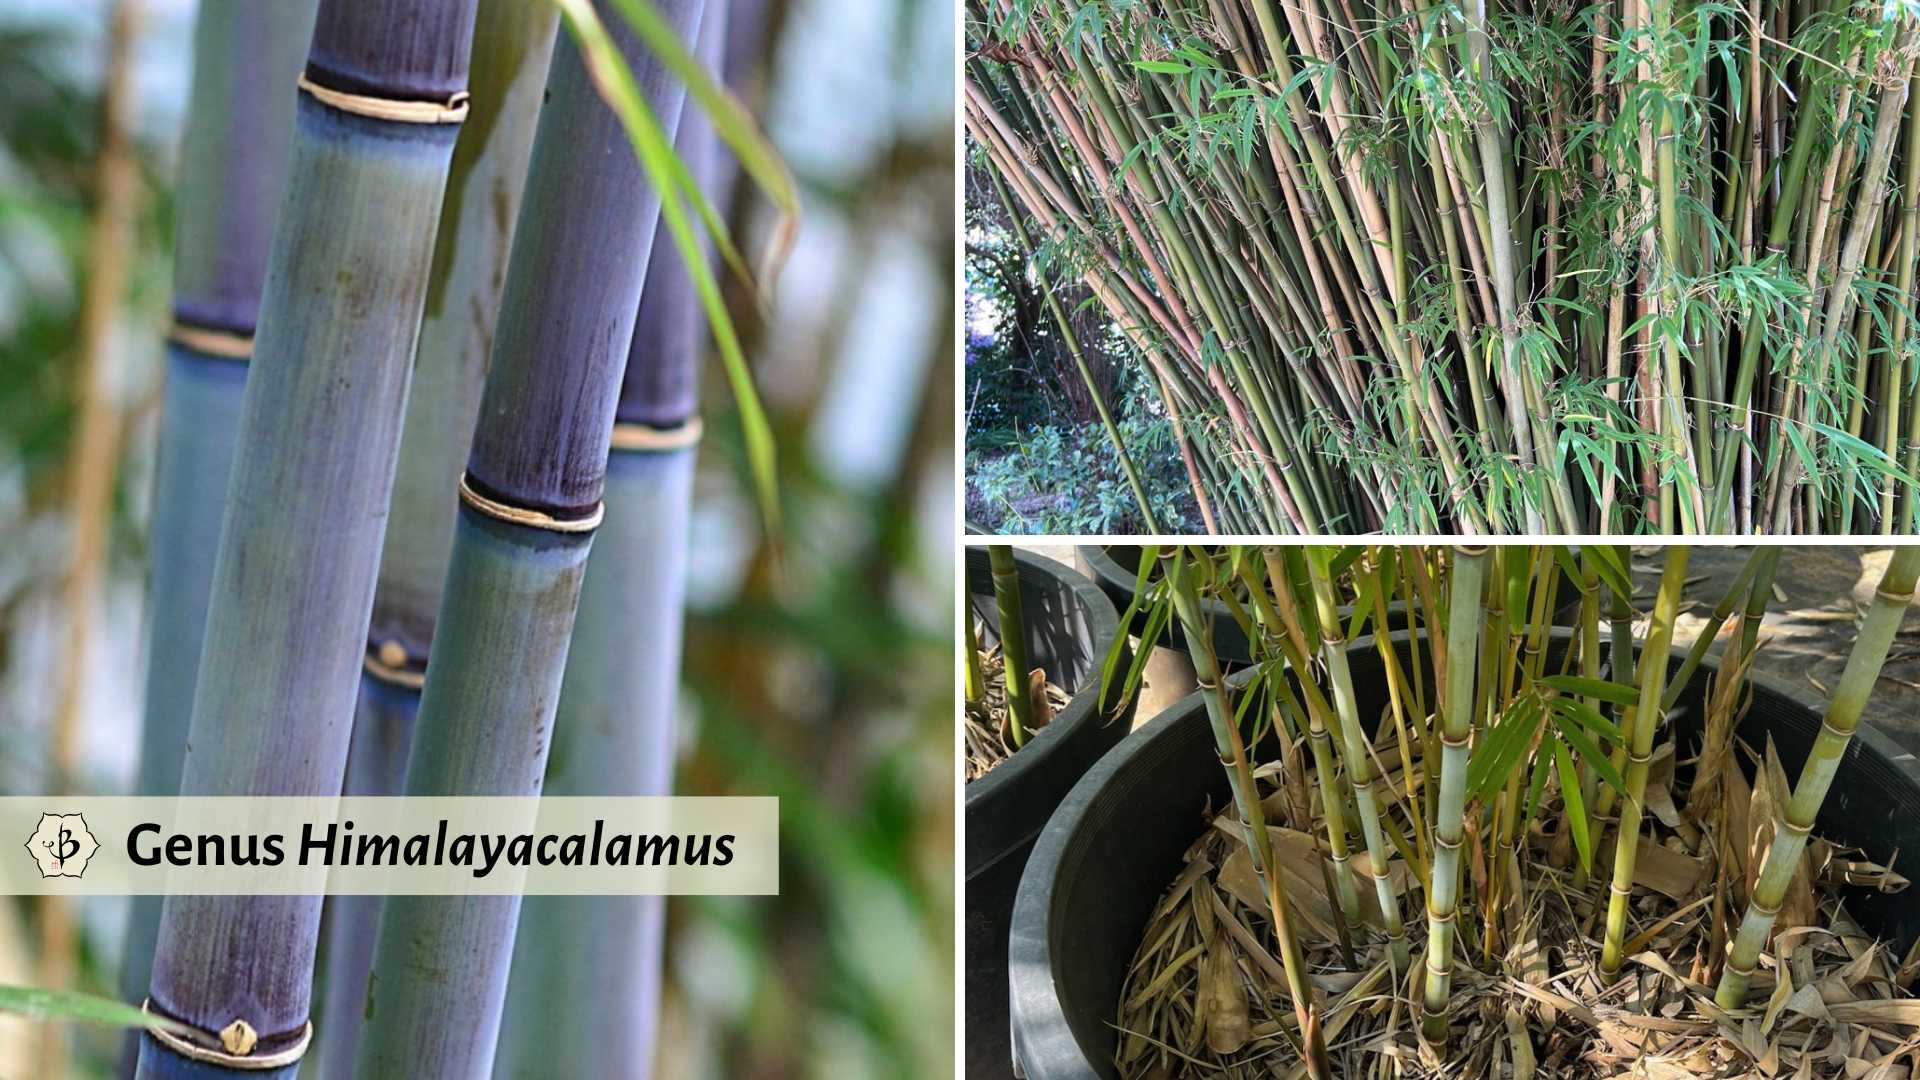 Genus Himalayacalamus bamboo species